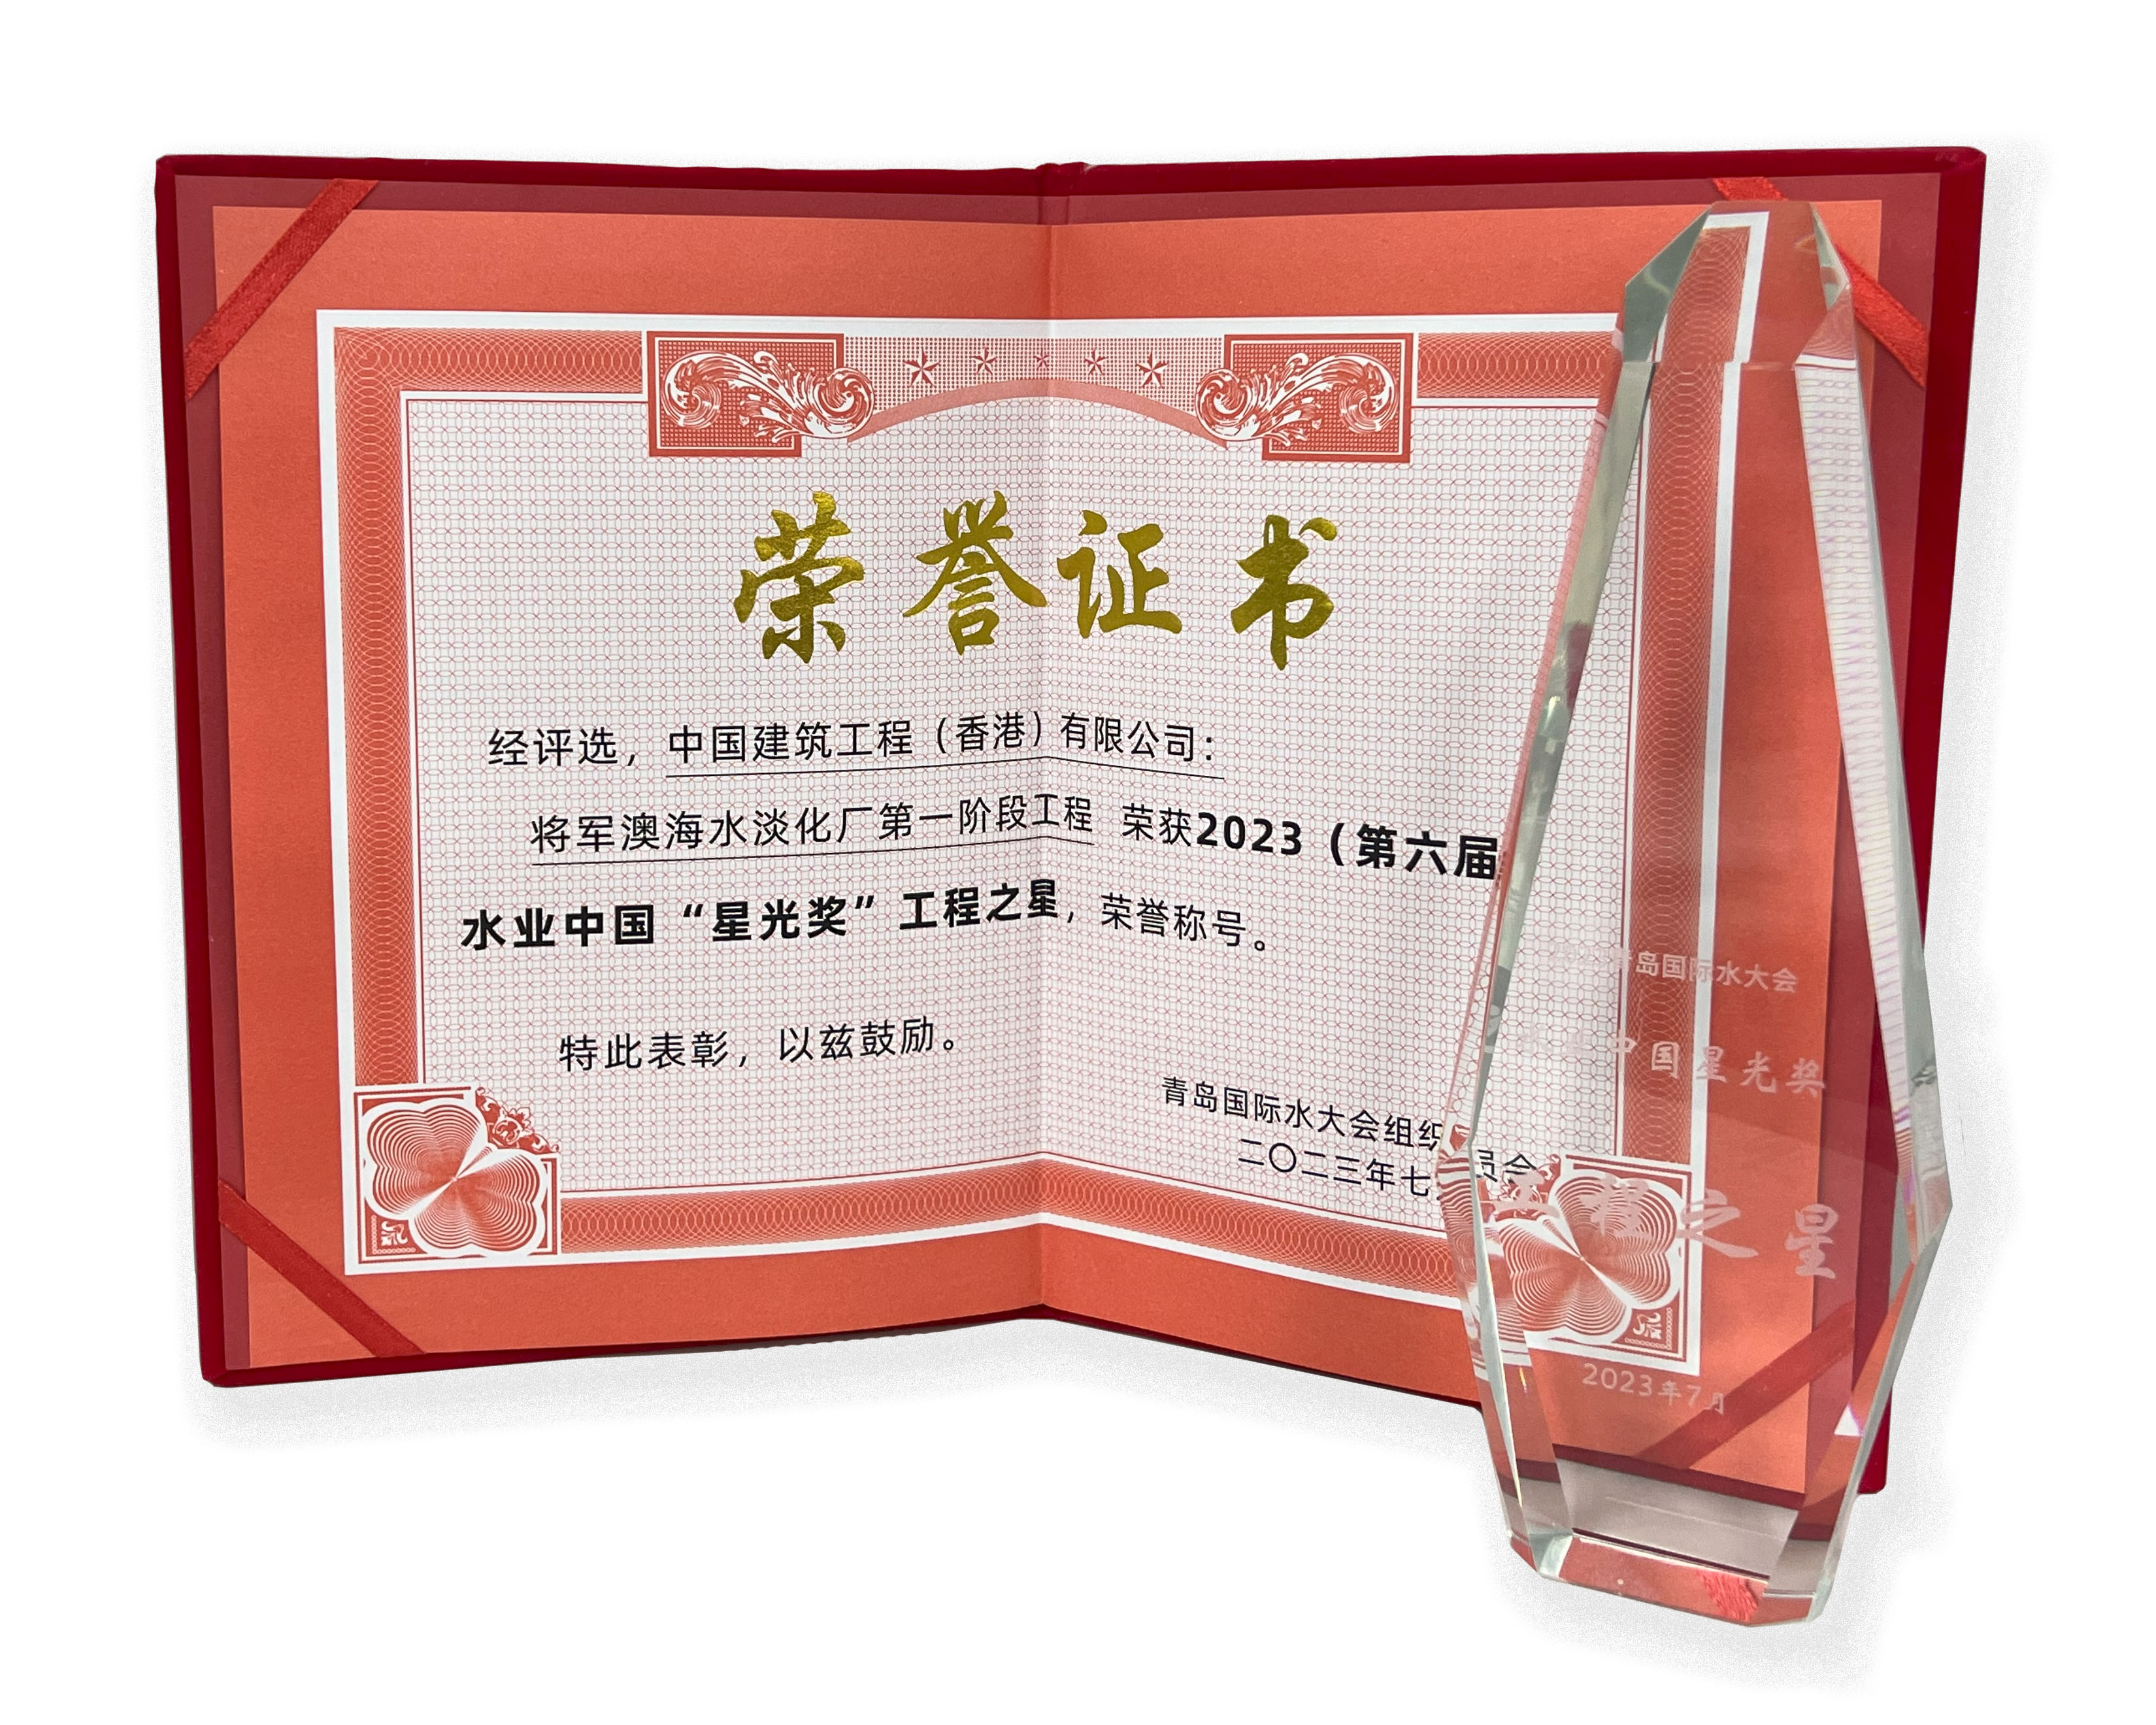 The Sixth Water Industry China Engineering Star Award